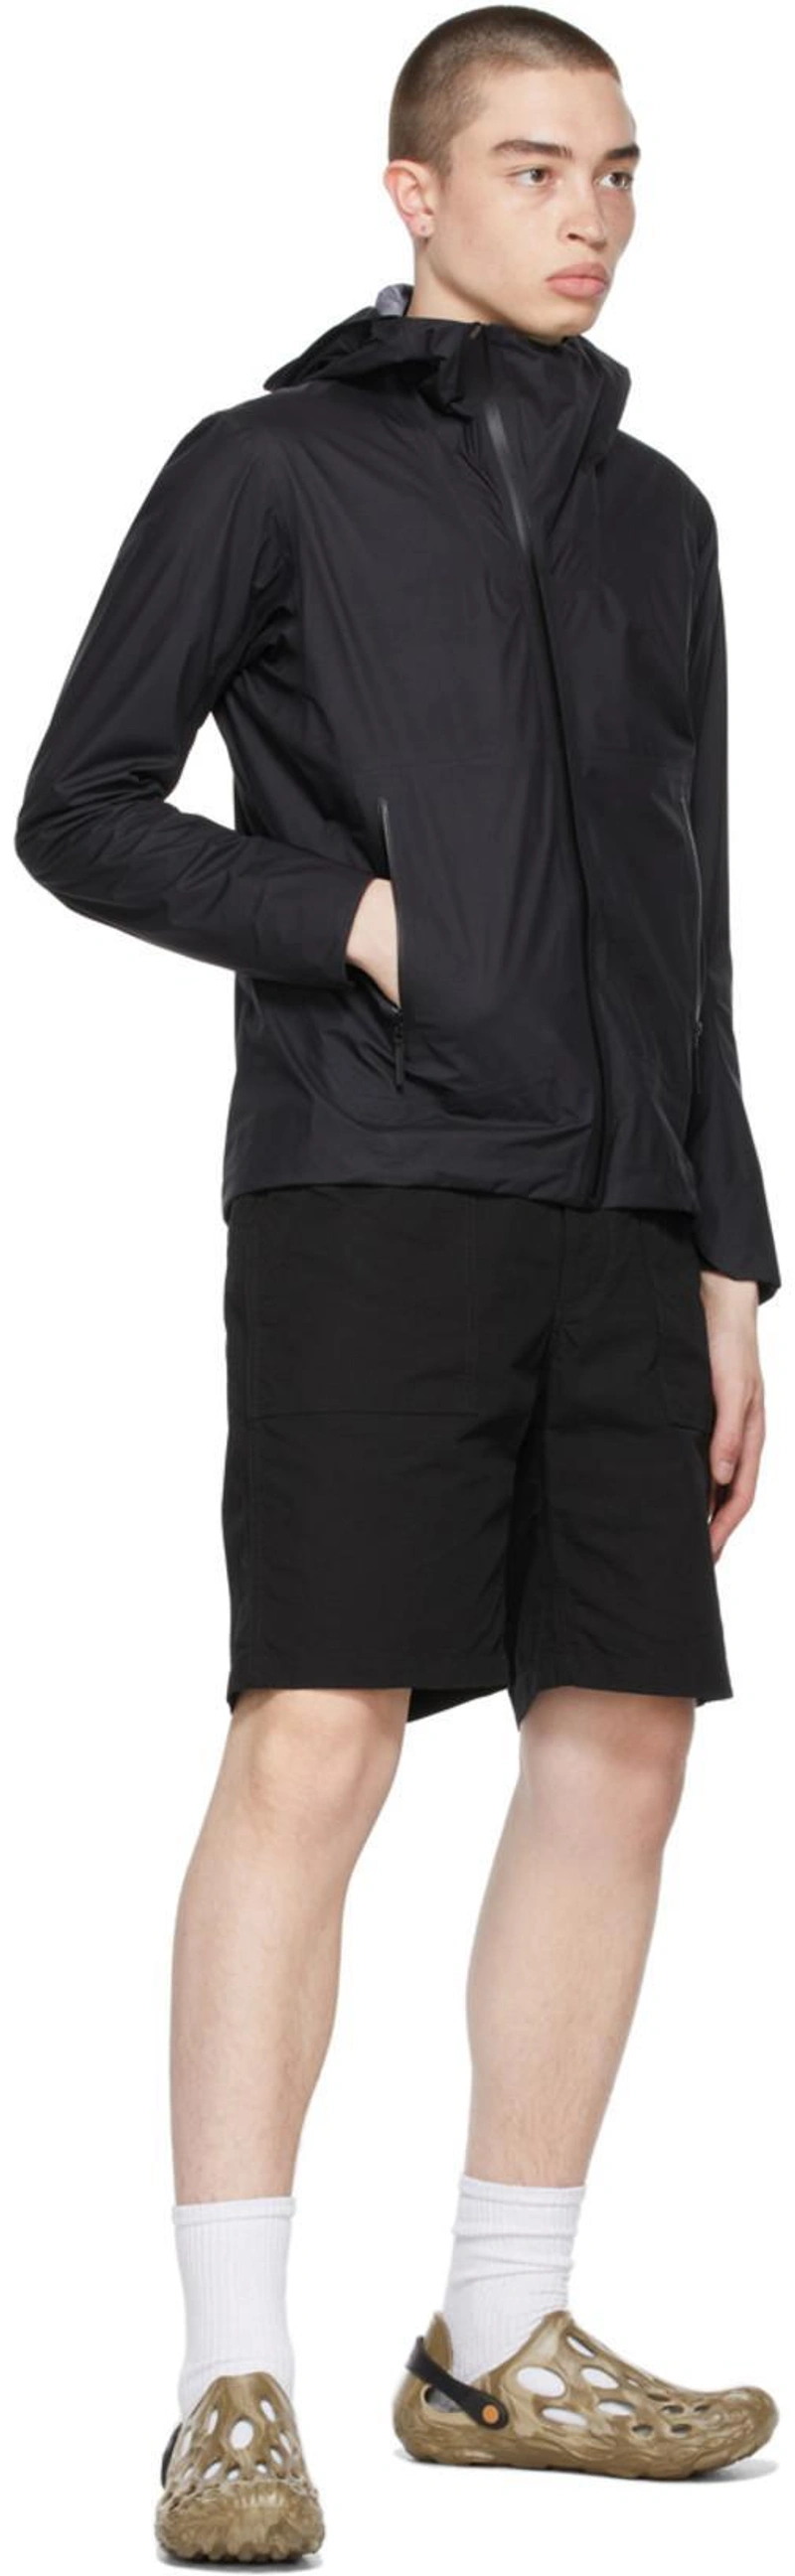 SSENSE's Post | Wearing: Y-3 White Classic Logo Long Sleeve T-shirt; Engineered Garments Black Ripstop Fatigue Shorts In Ct056 Black; Veilance Deploy Lt Gore-tex C-knit(tm) Waterproof Hooded Jacket In Black